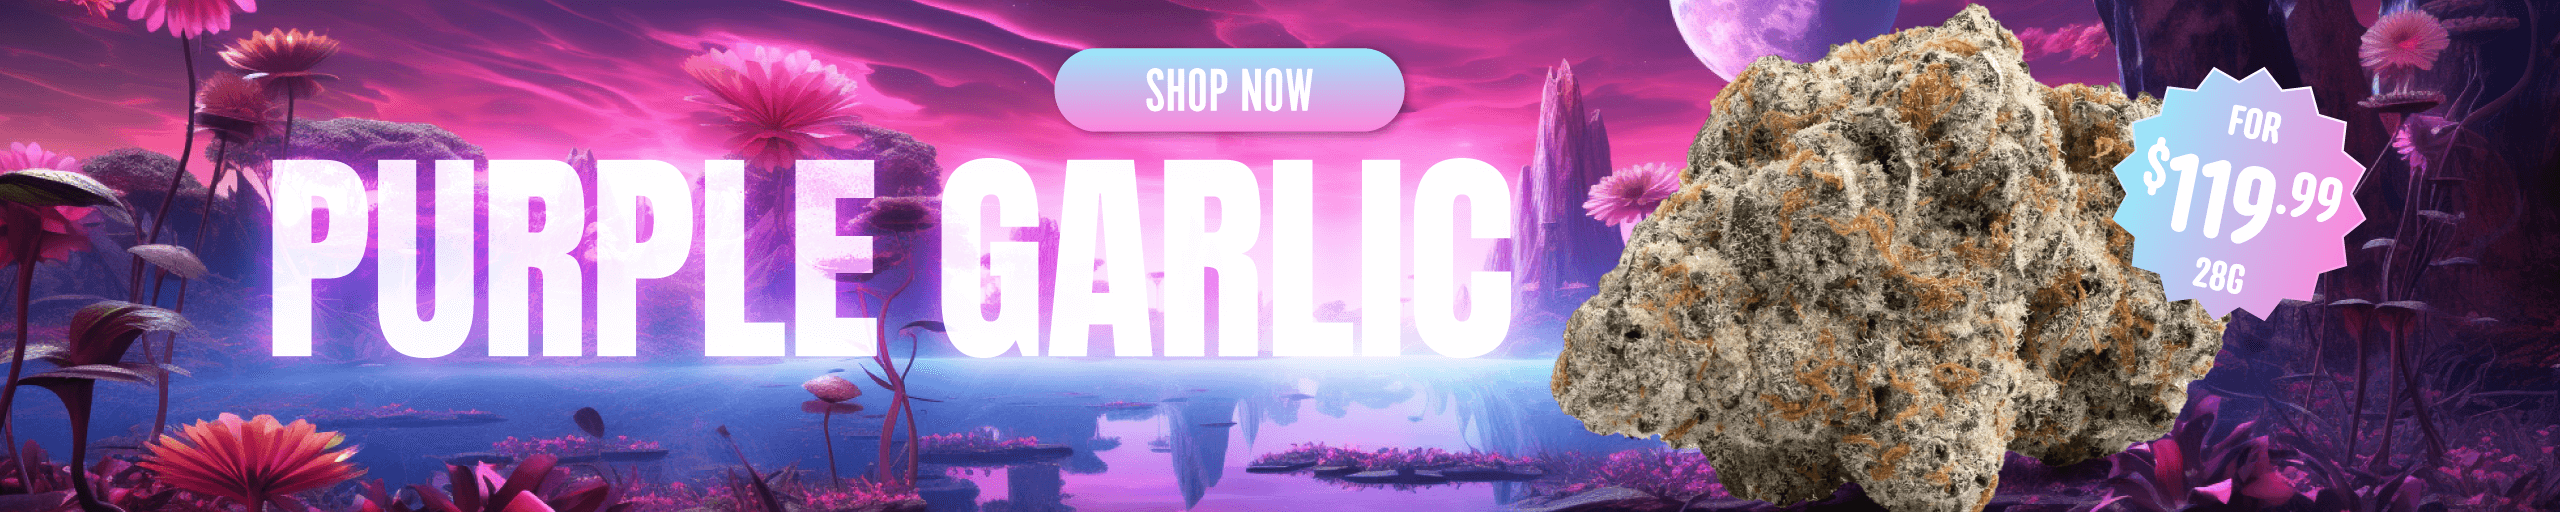 Purple-Garlic_web